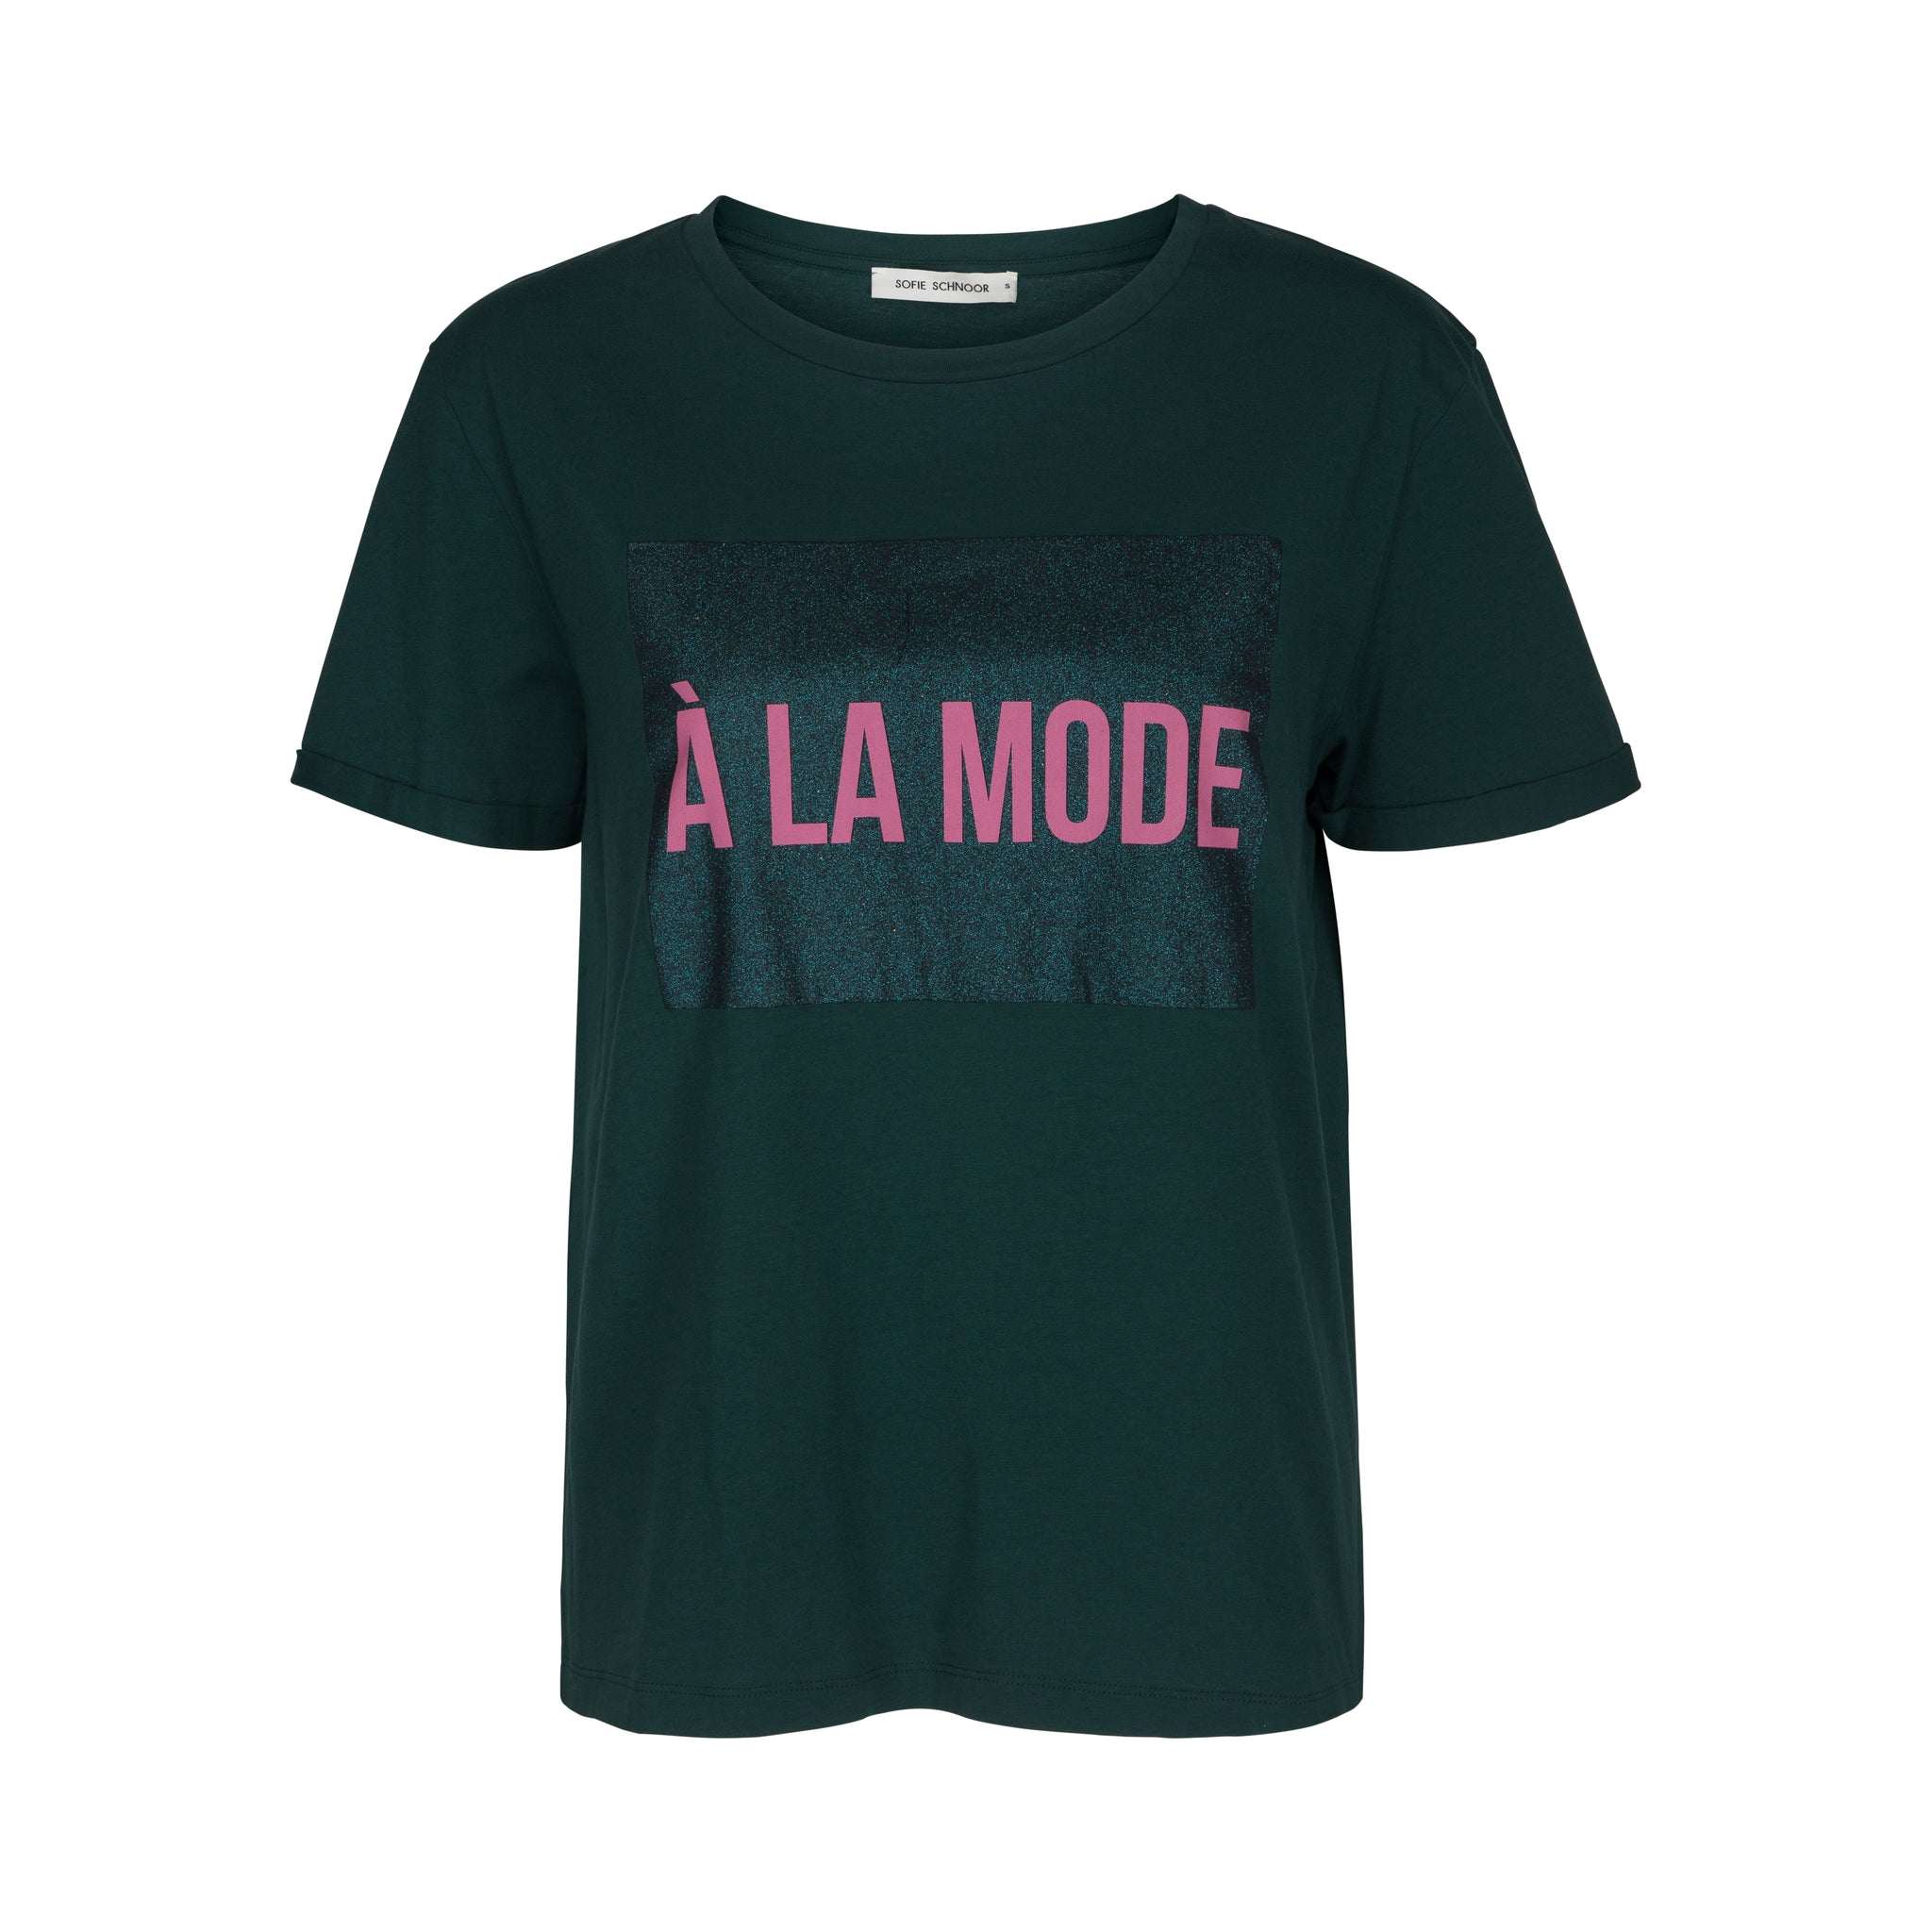 Sofie Schnoor - T-shirt, À La Mode - Petrol